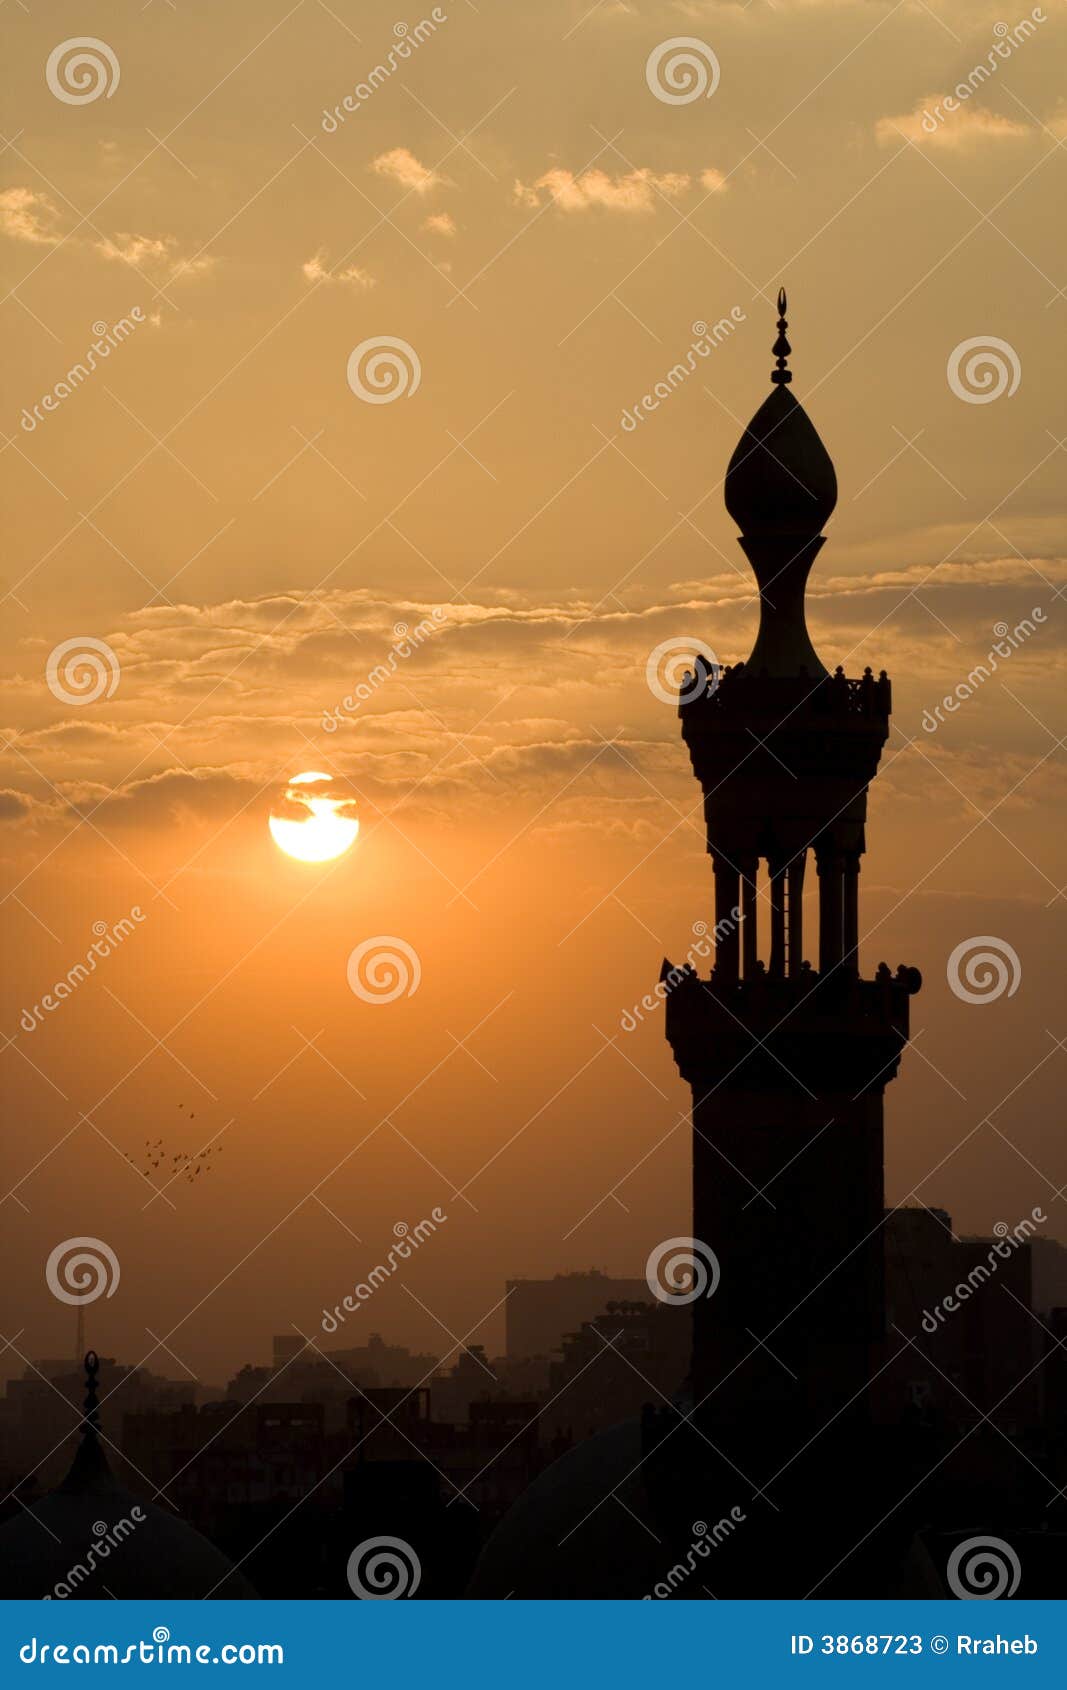 cairo mosque minaret at dusk